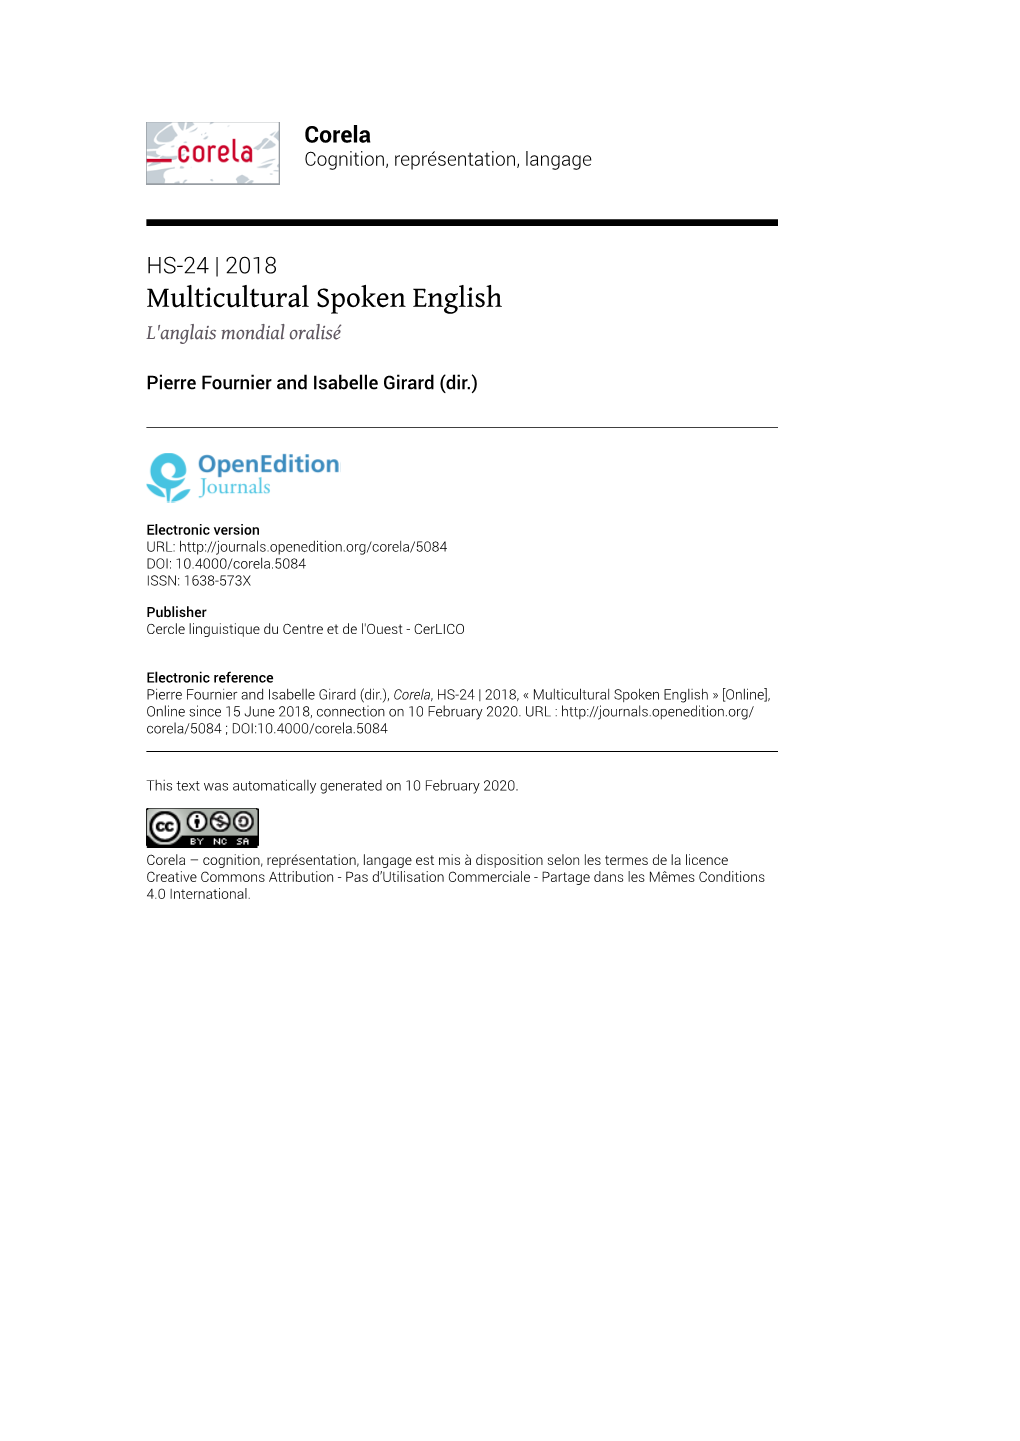 Corela, HS-24 | 2018, « Multicultural Spoken English » [Online], Online Since 15 June 2018, Connection on 10 February 2020